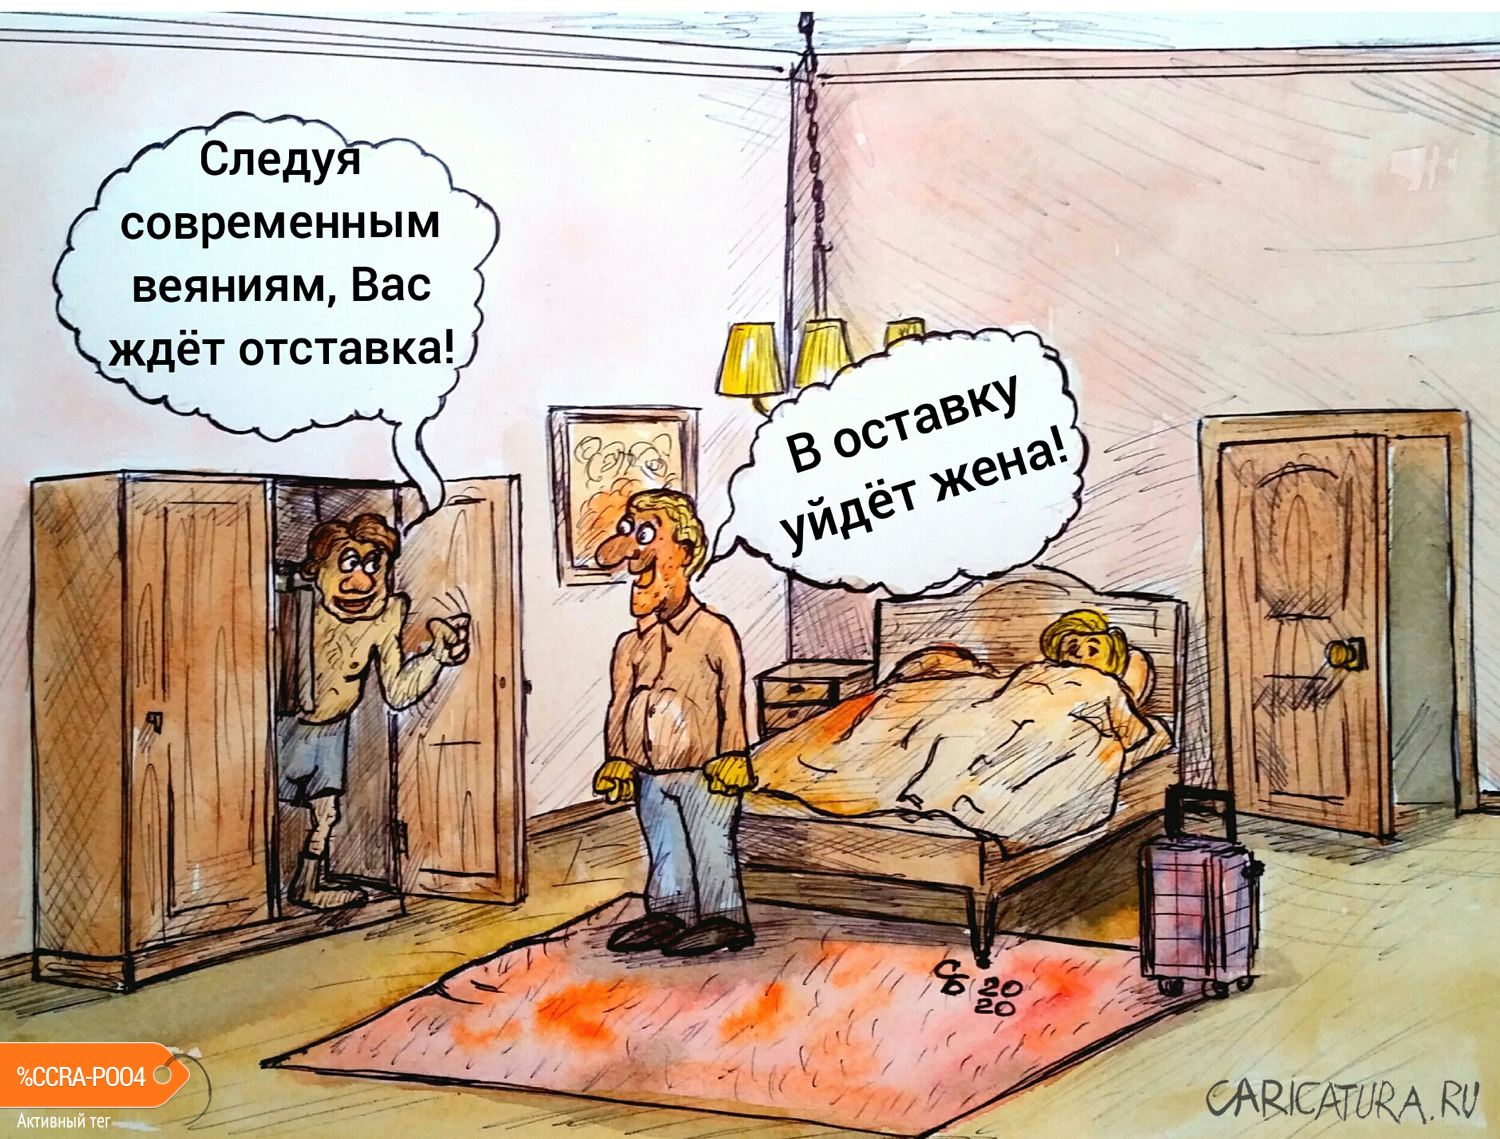 Карикатура "Частный случай", Сергей Боровиков